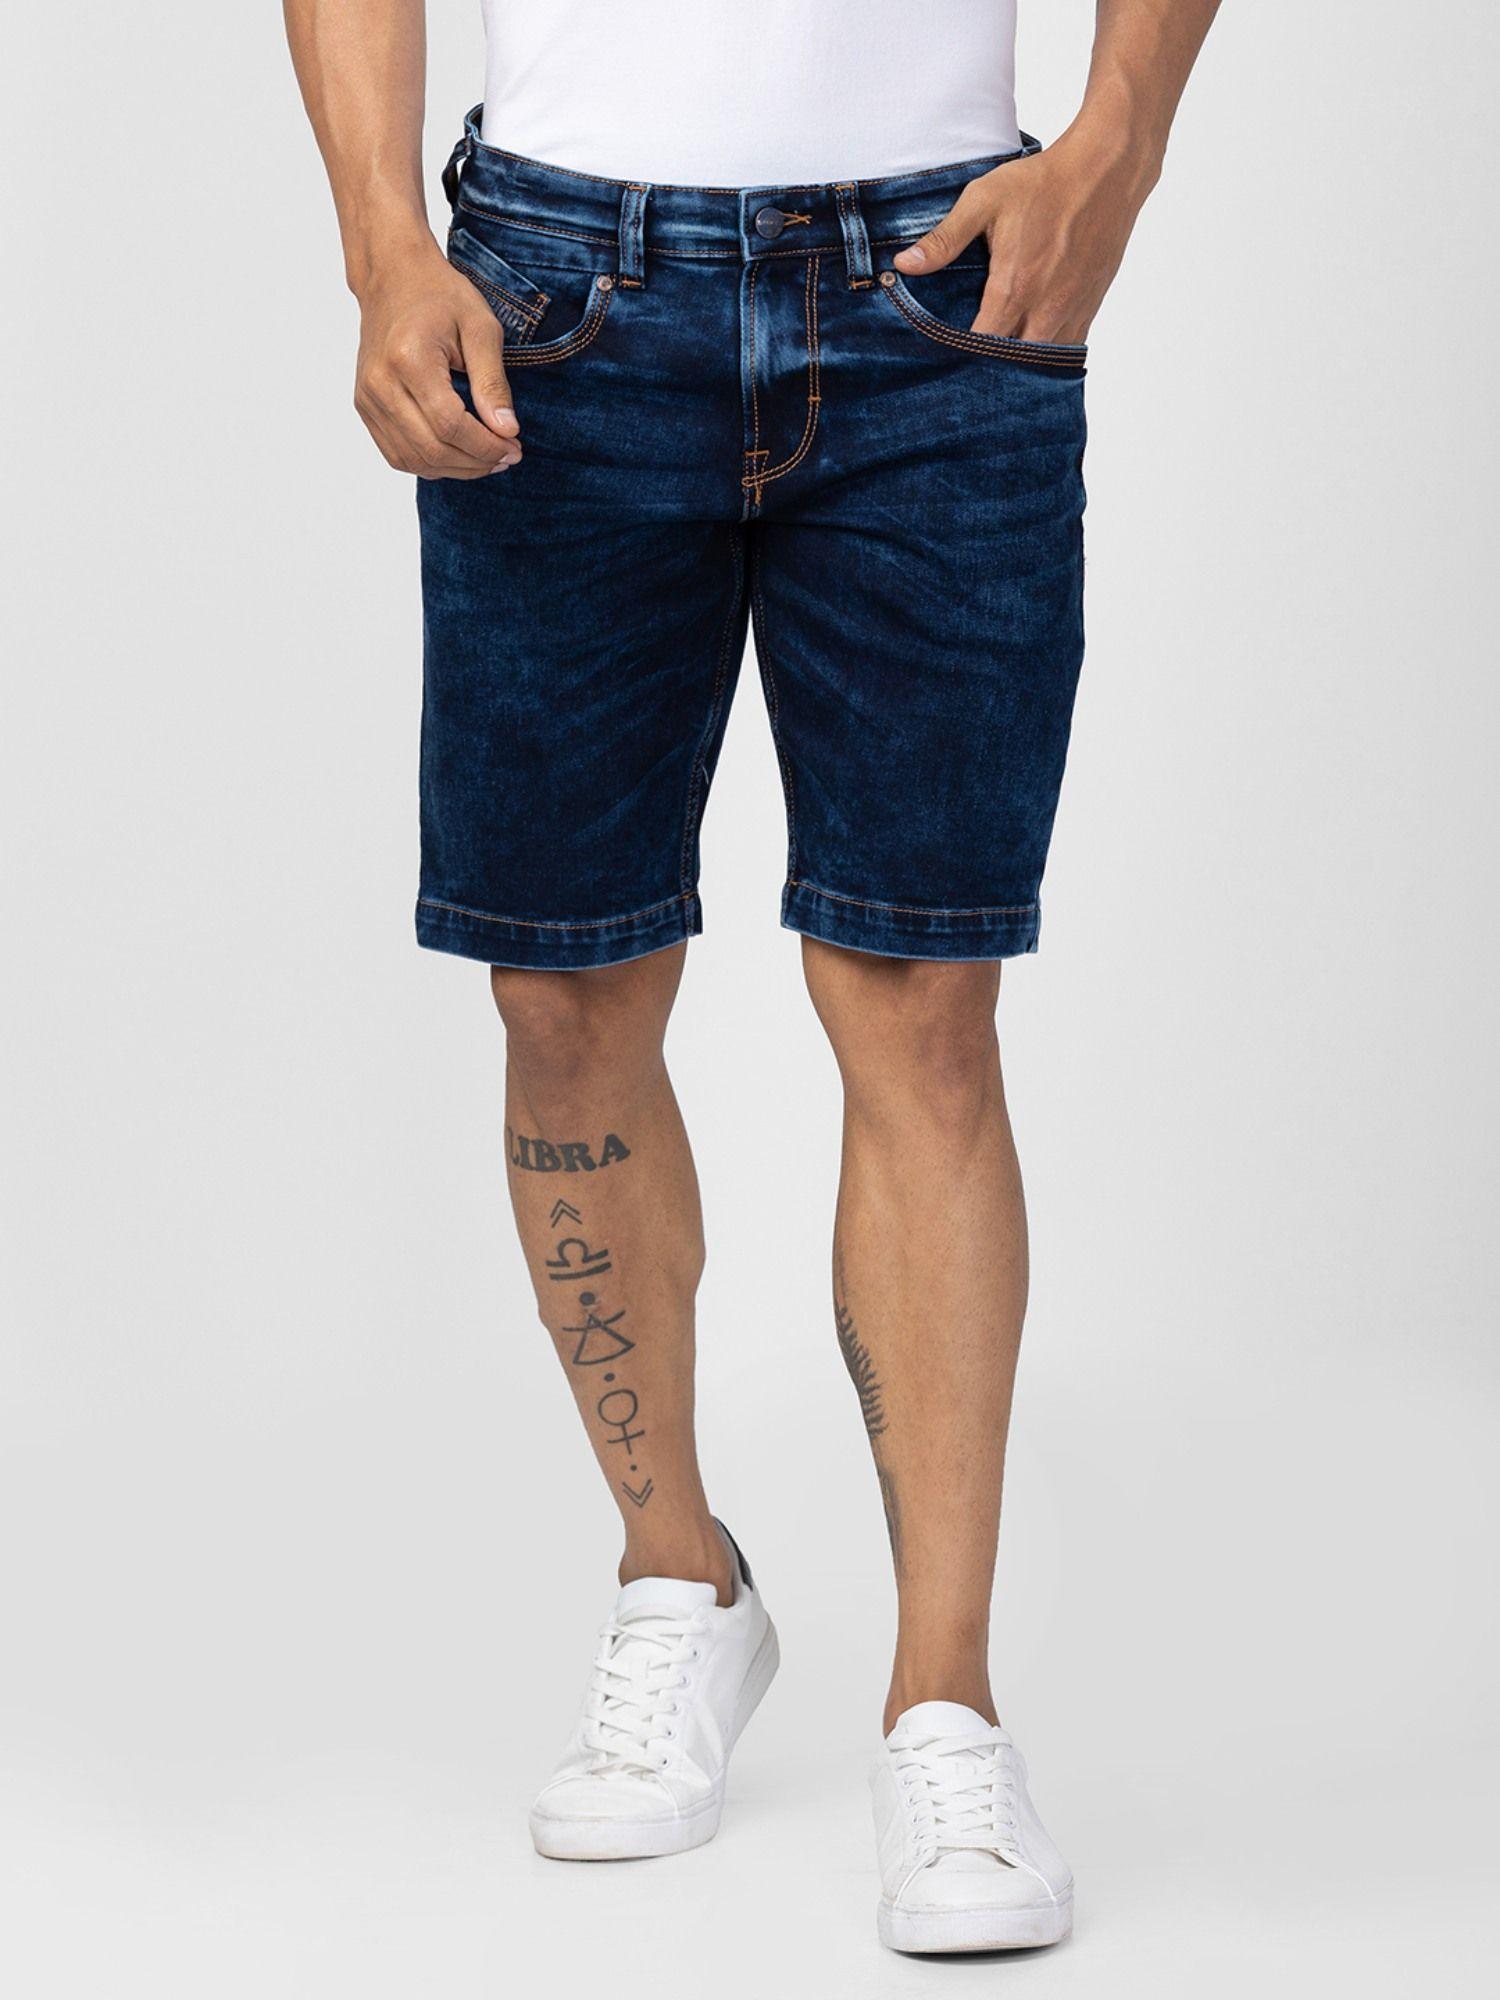 dark blue cotton blend shorts for men